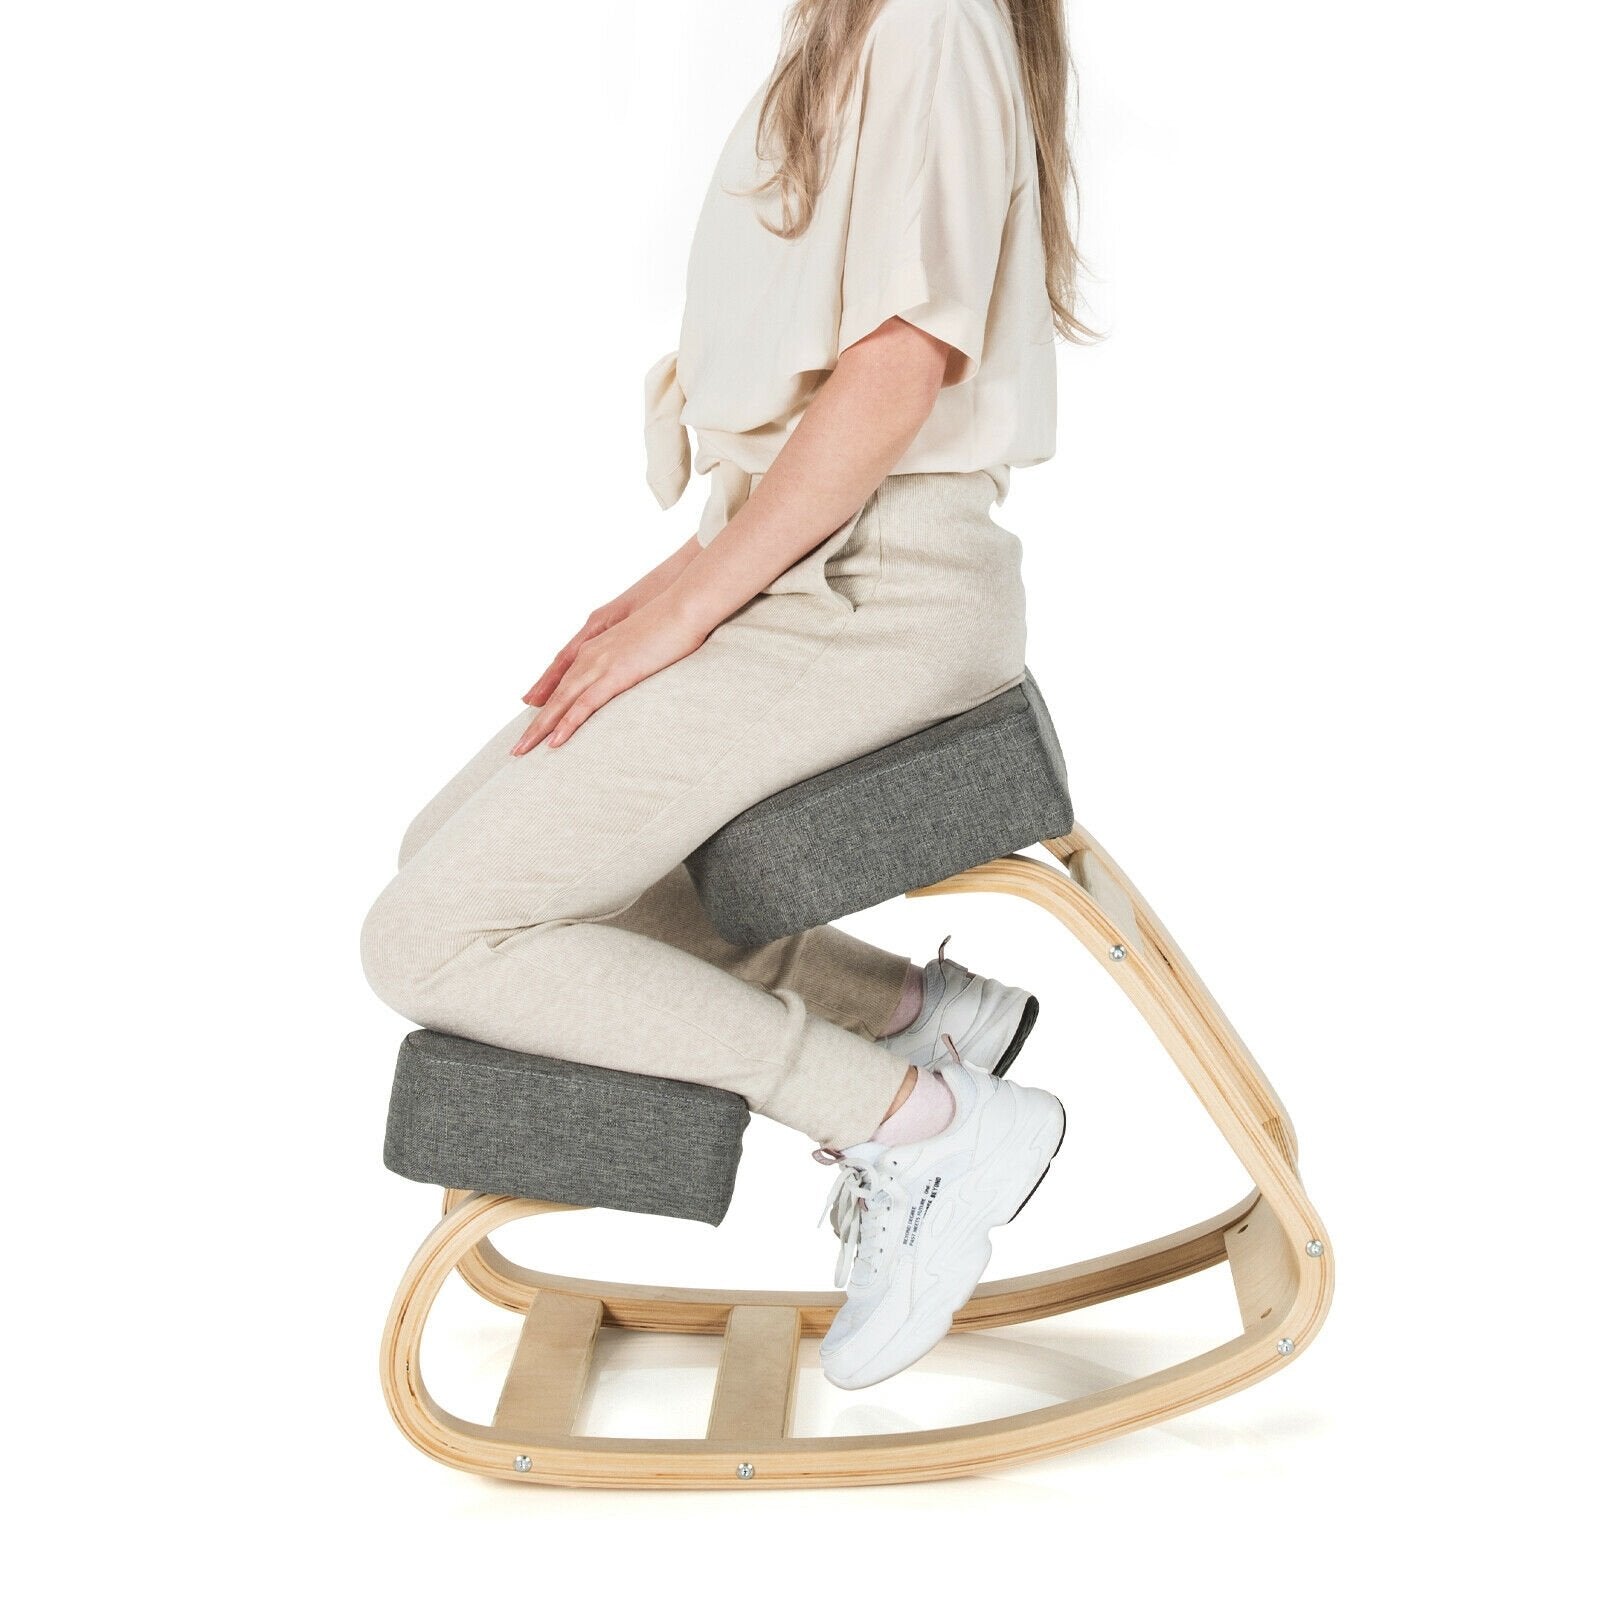 Ergonomic Kneeling Chair Rocking Office Desk Stool Upright Posture, Gray - Gallery Canada